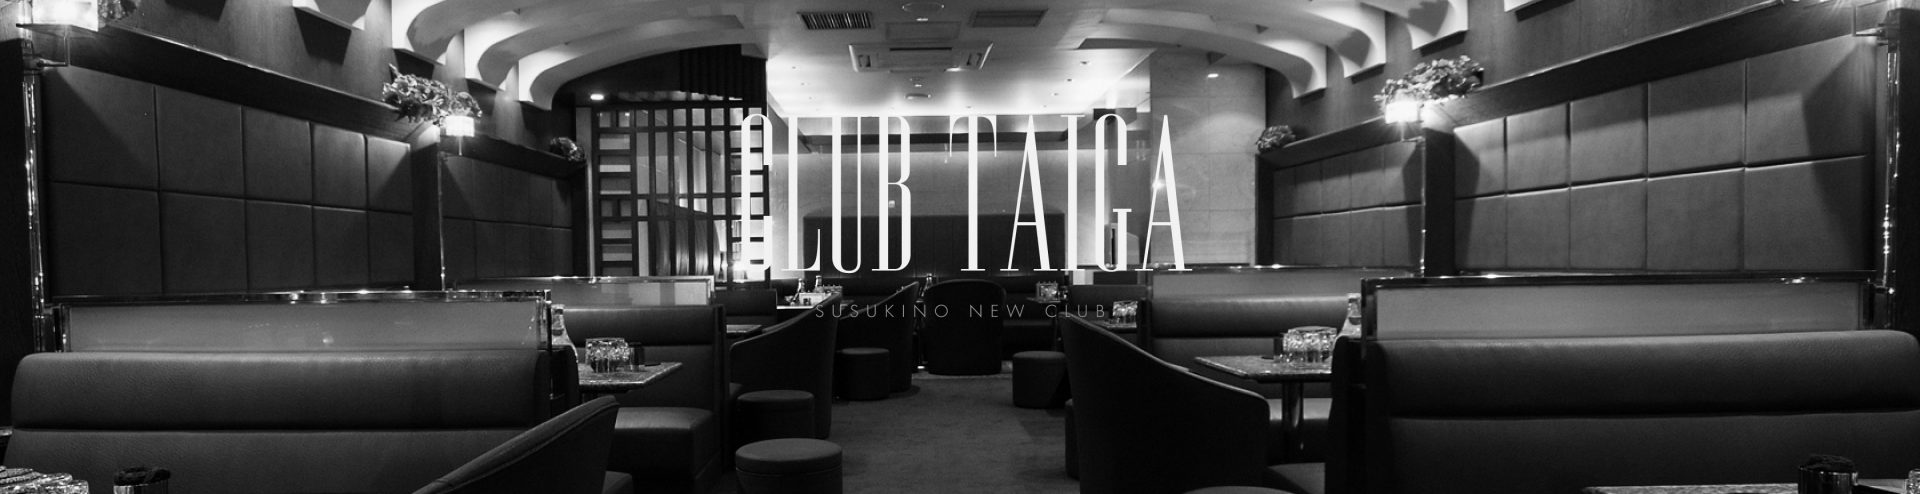 CLUB TAIGA